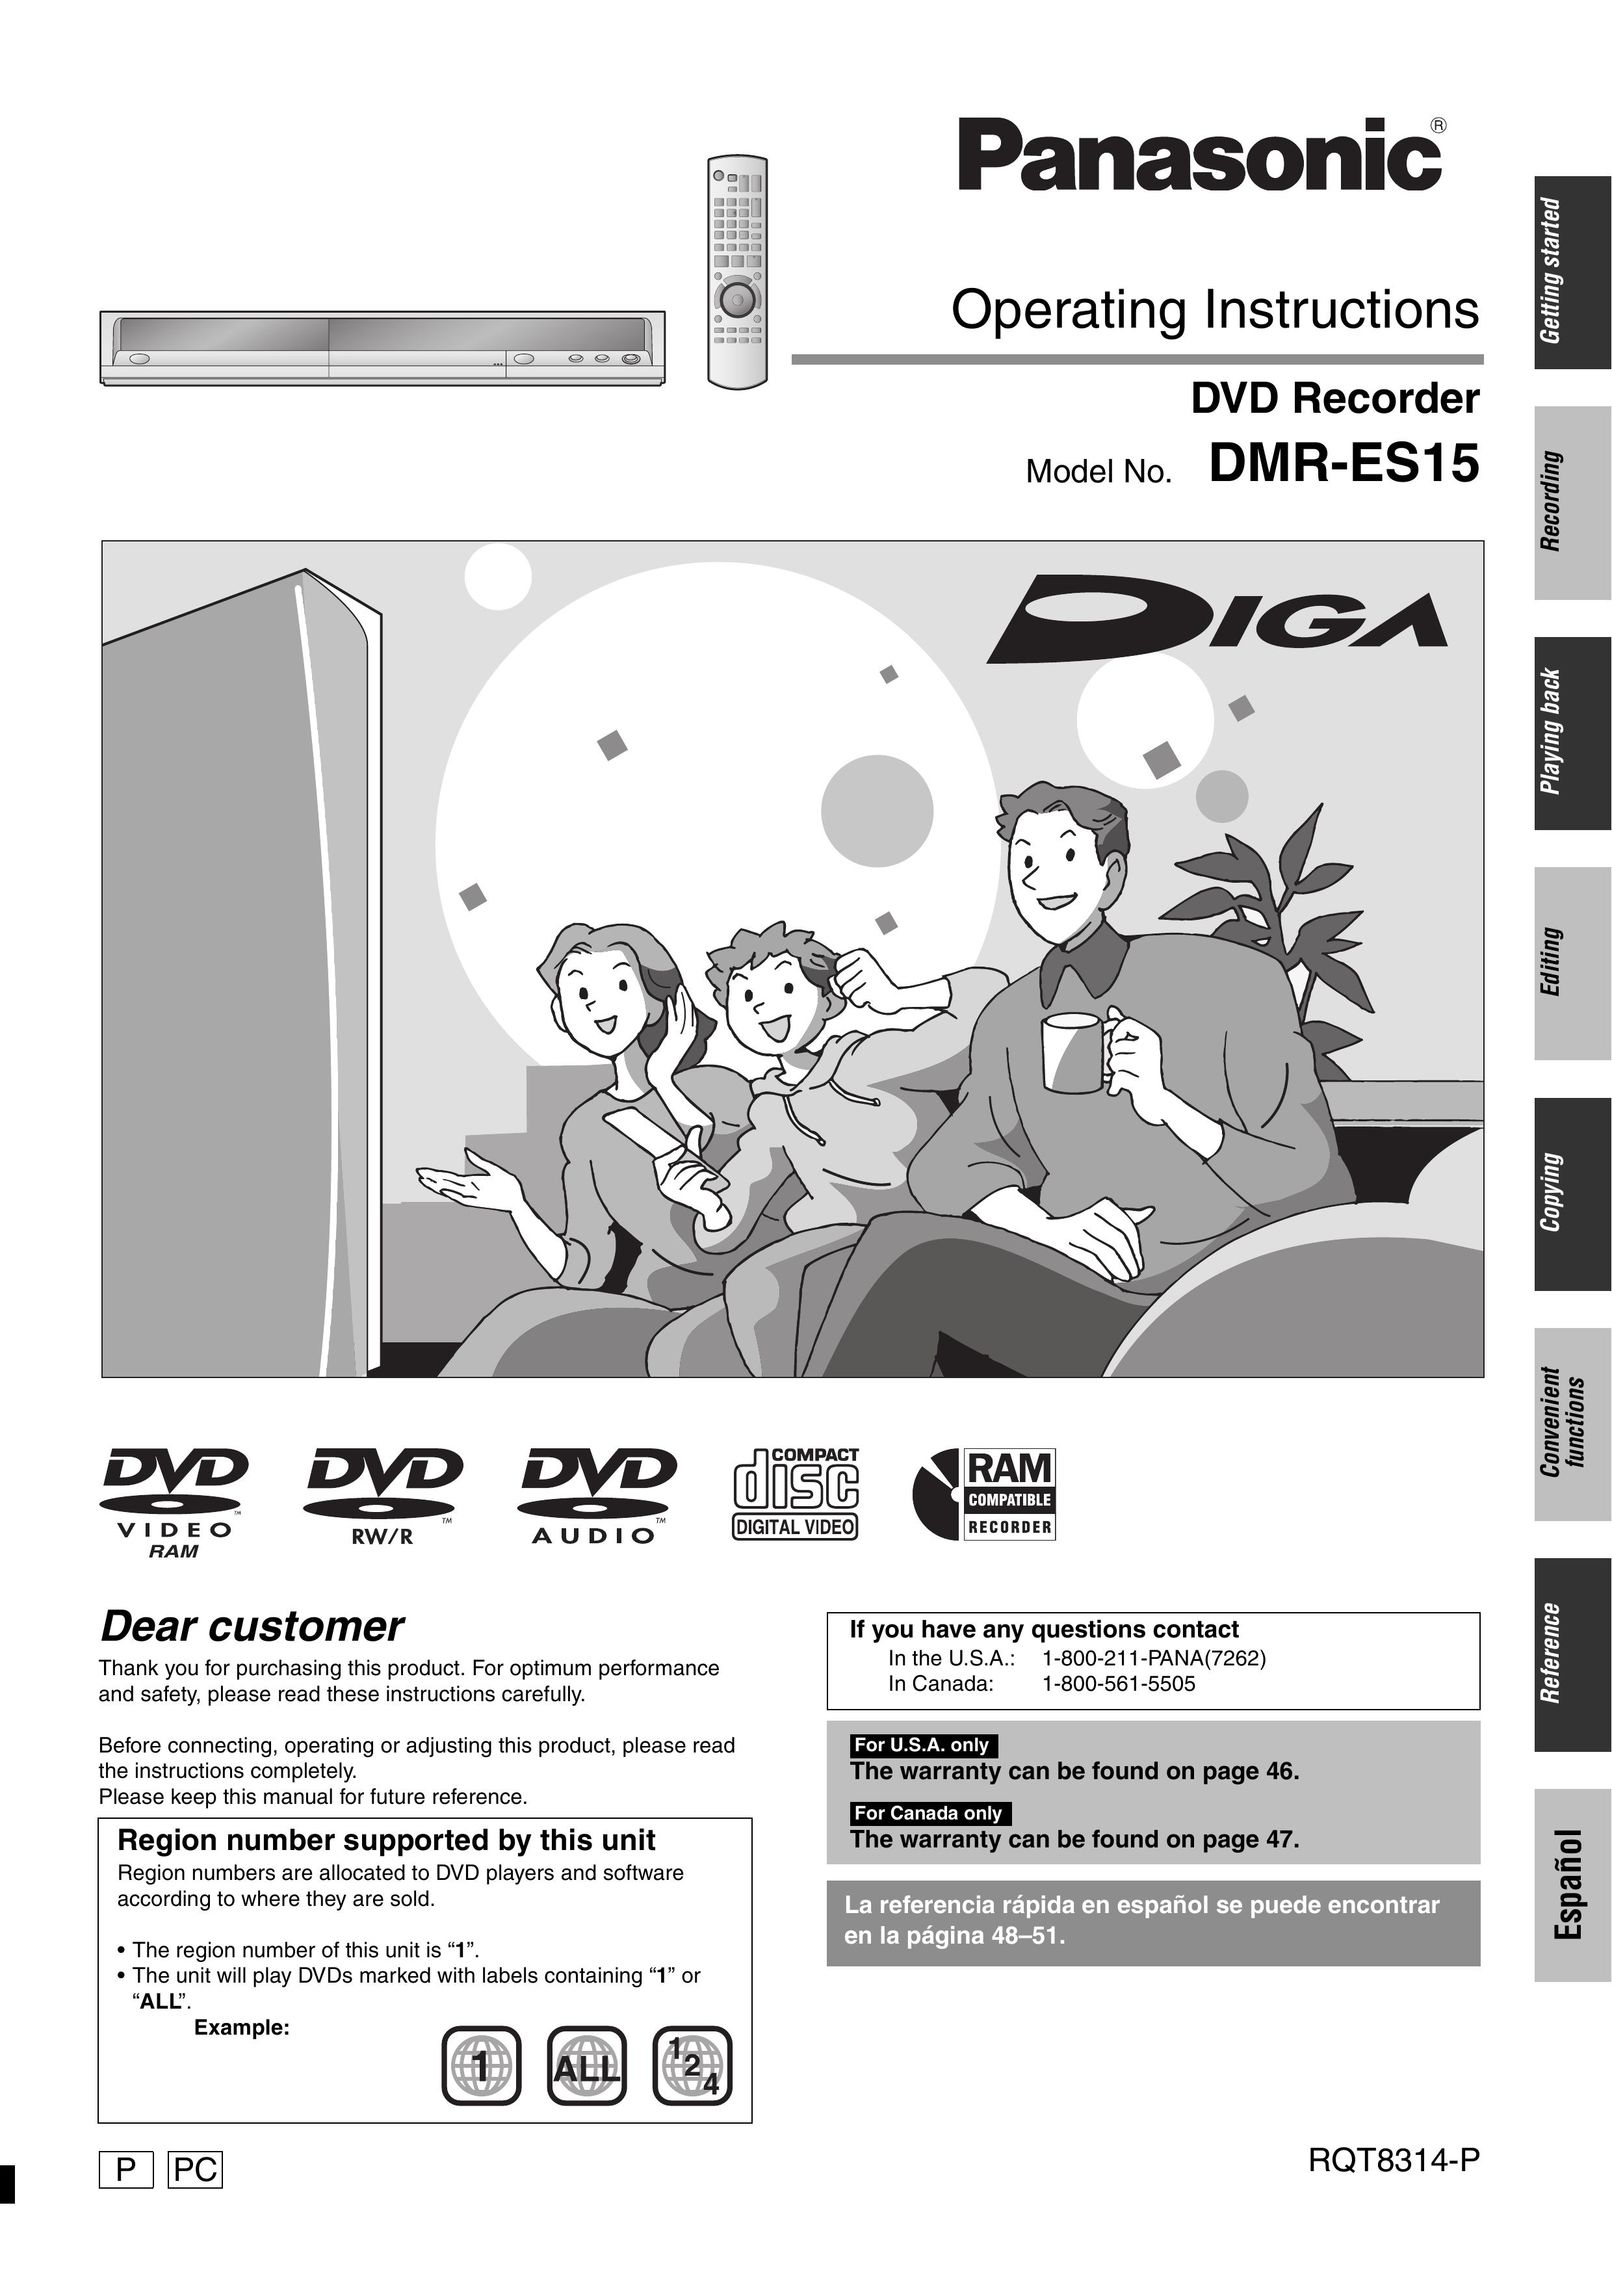 Panasonic DMR-ES15 DVD Recorder User Manual